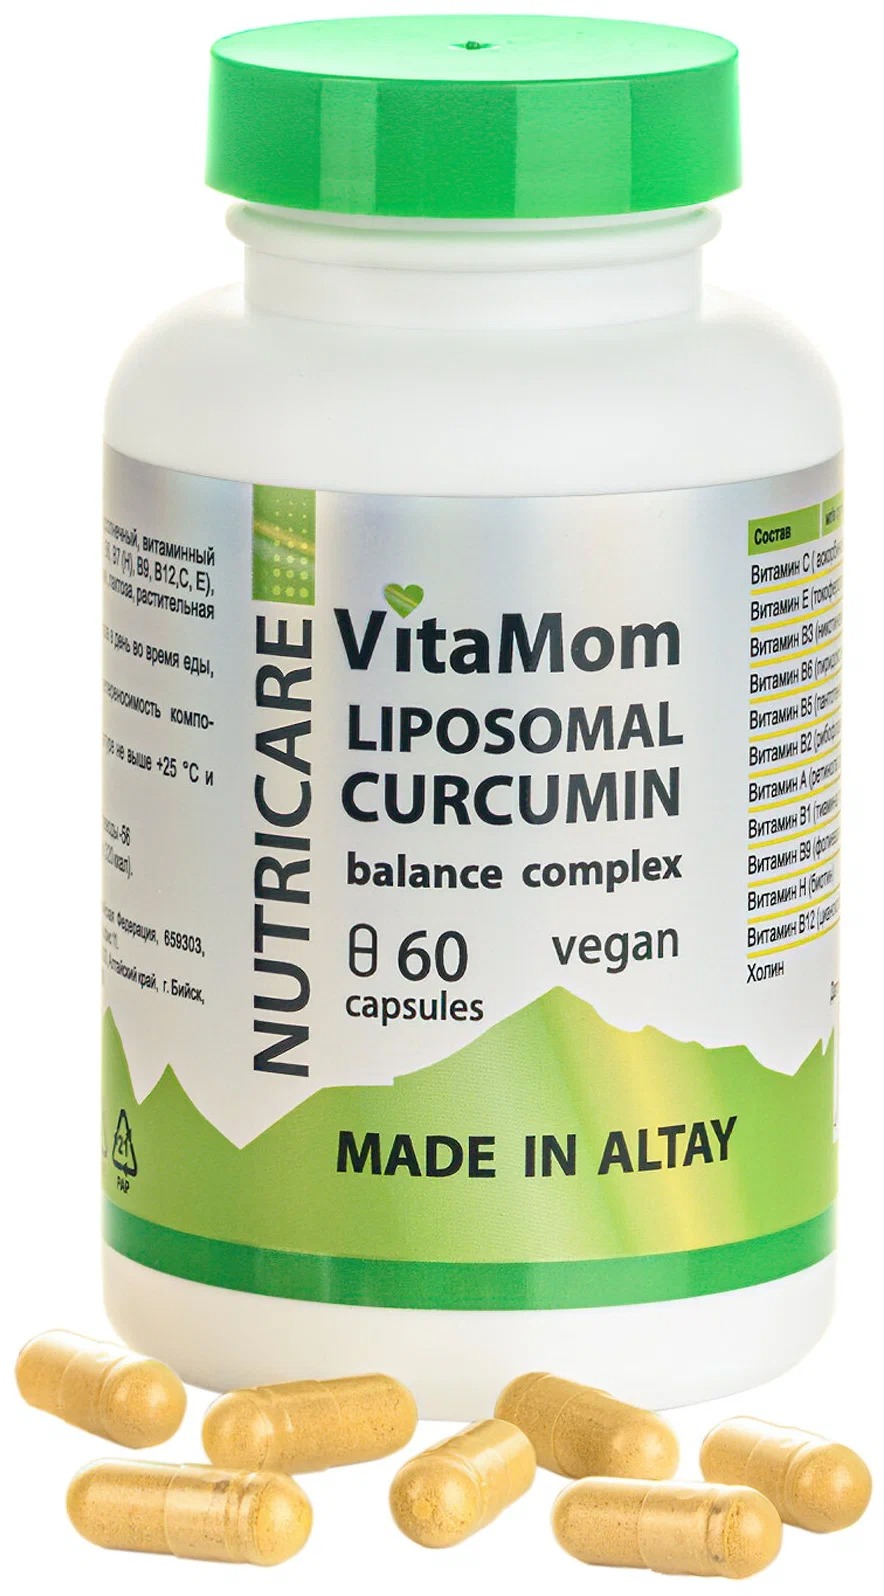 Купить Liposomal Curcumin Вита Мом баланс комплекс + 11 витаминов, веган, 60 капсул